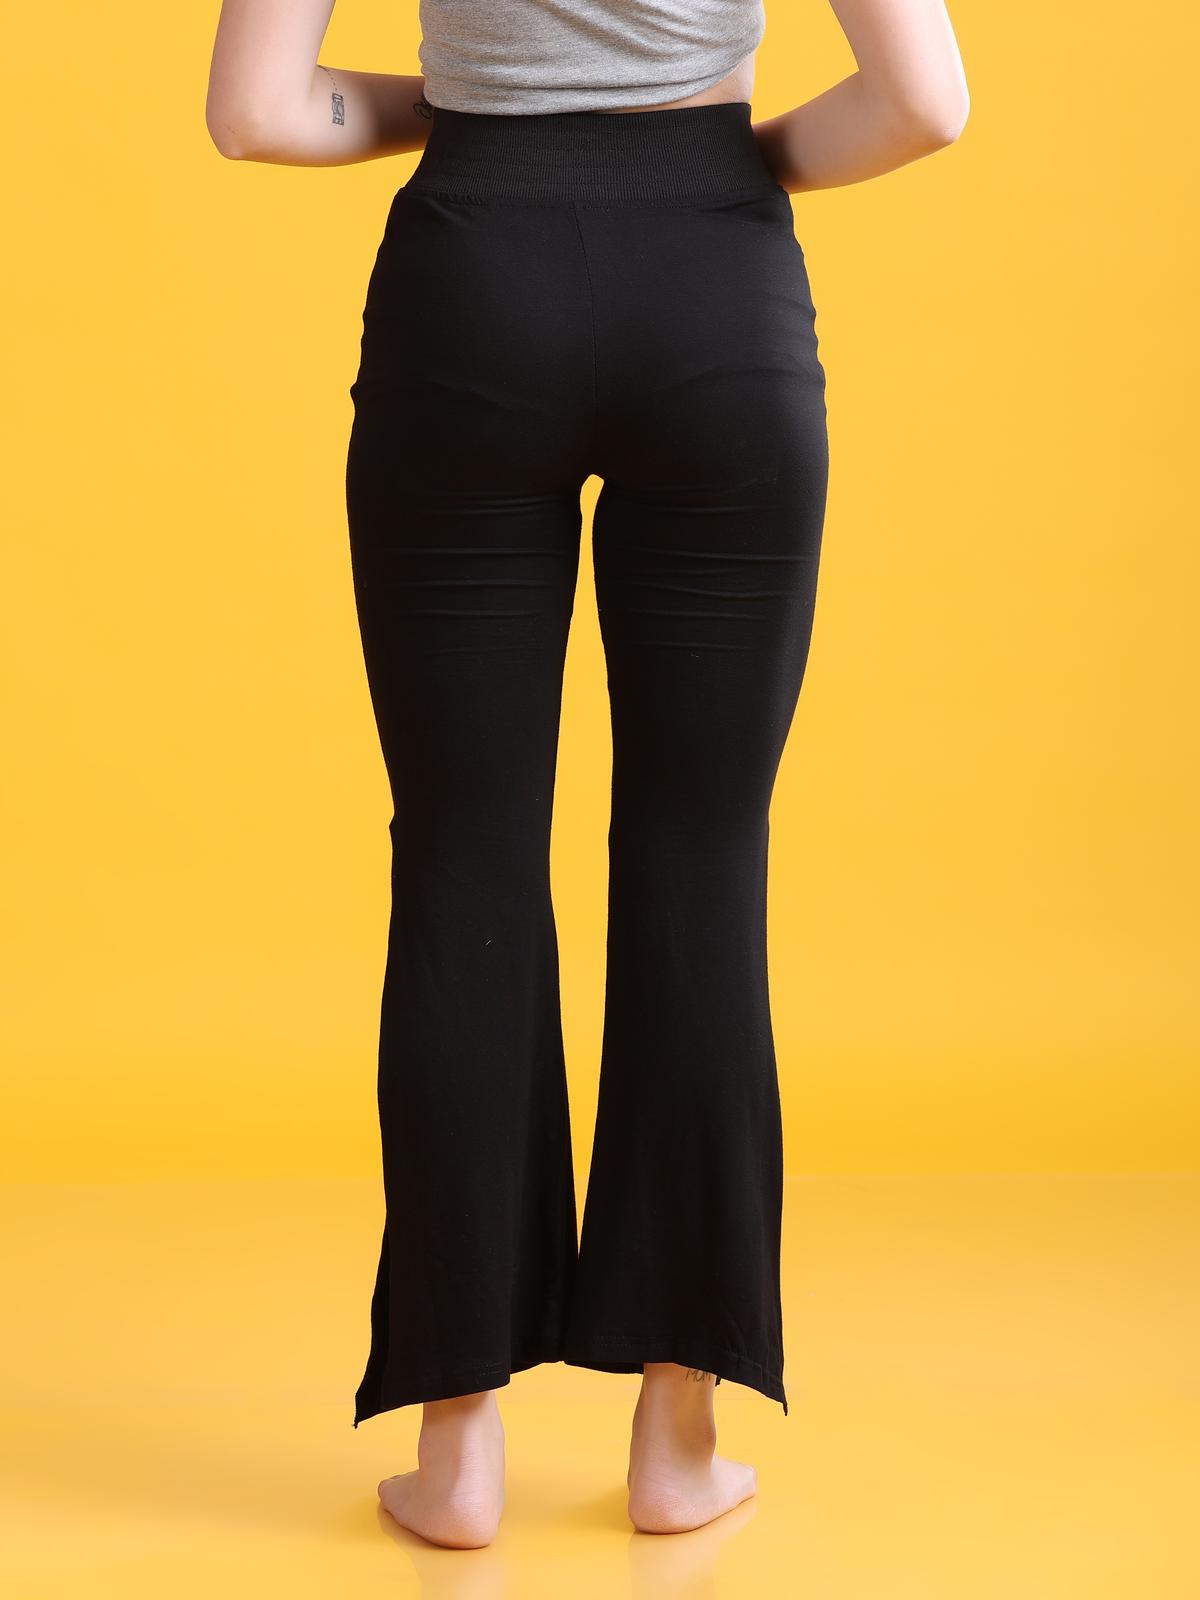 Buy Women High Waist Cotton Side Slit Flared Pants Online